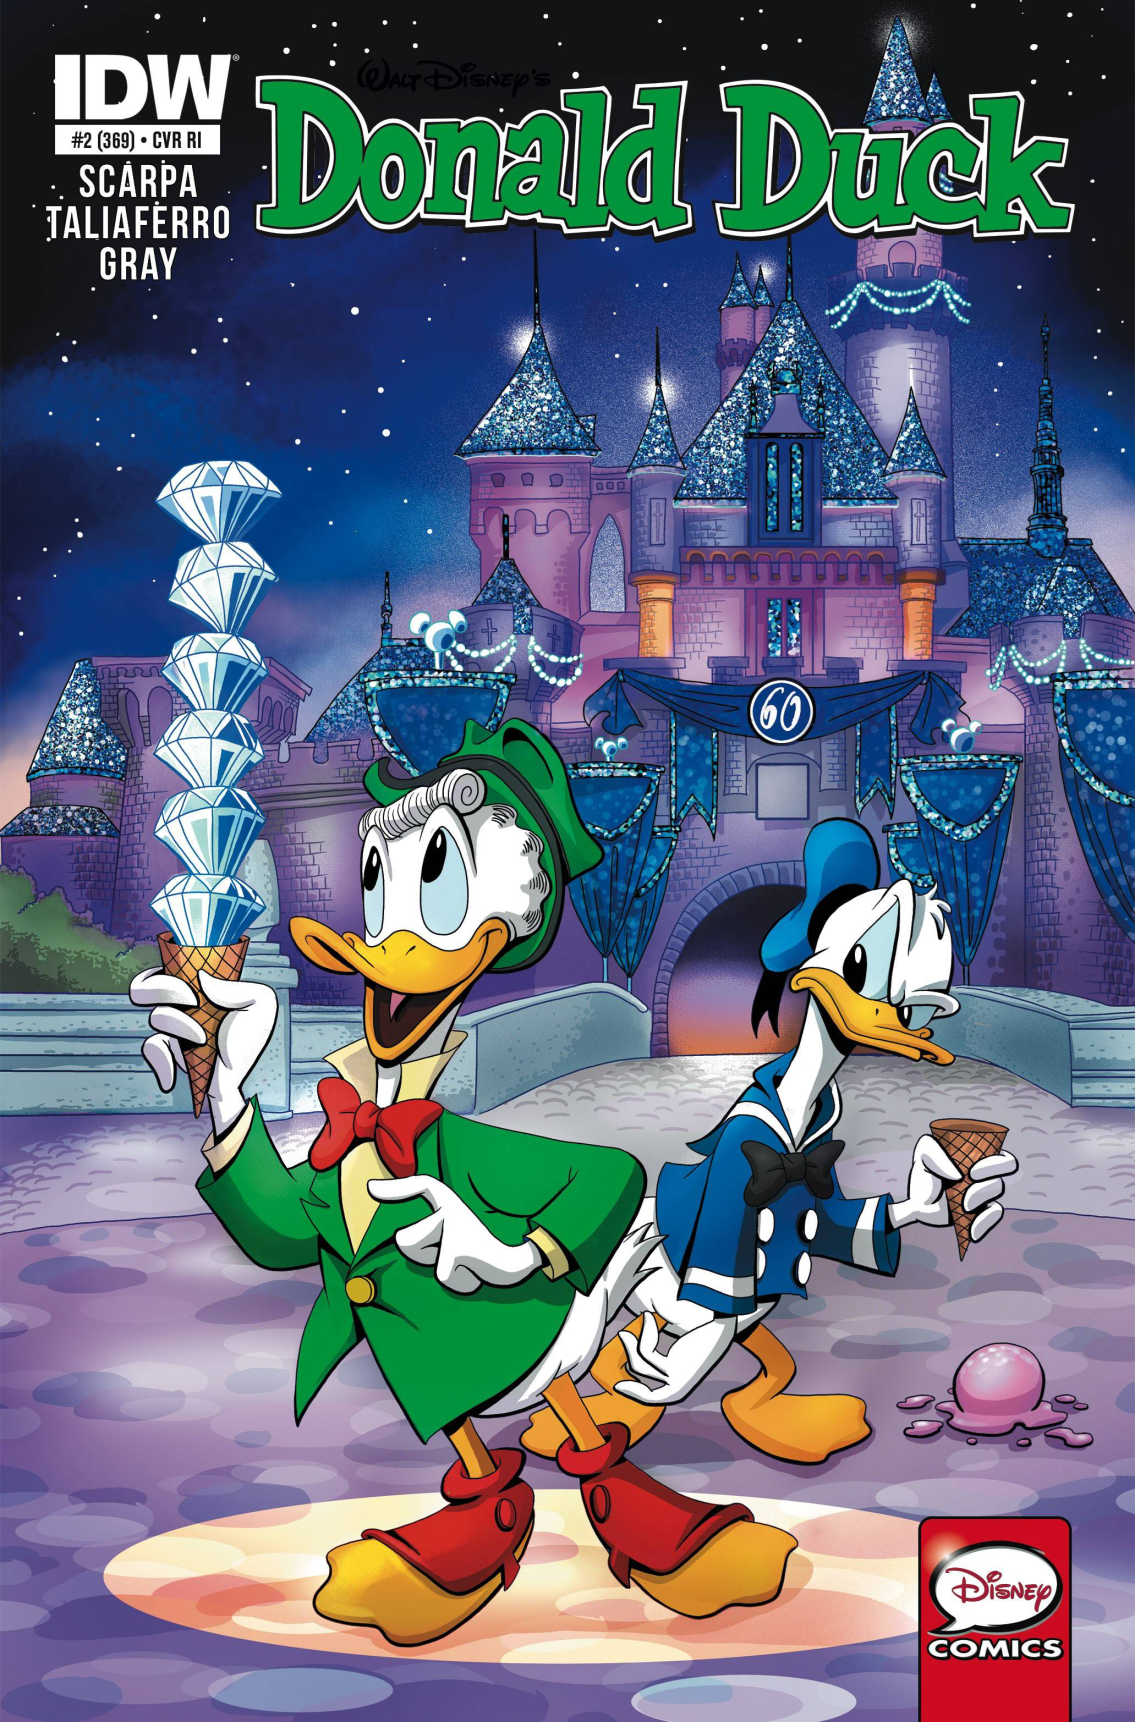 Donald Duck in comics, Disney Wiki